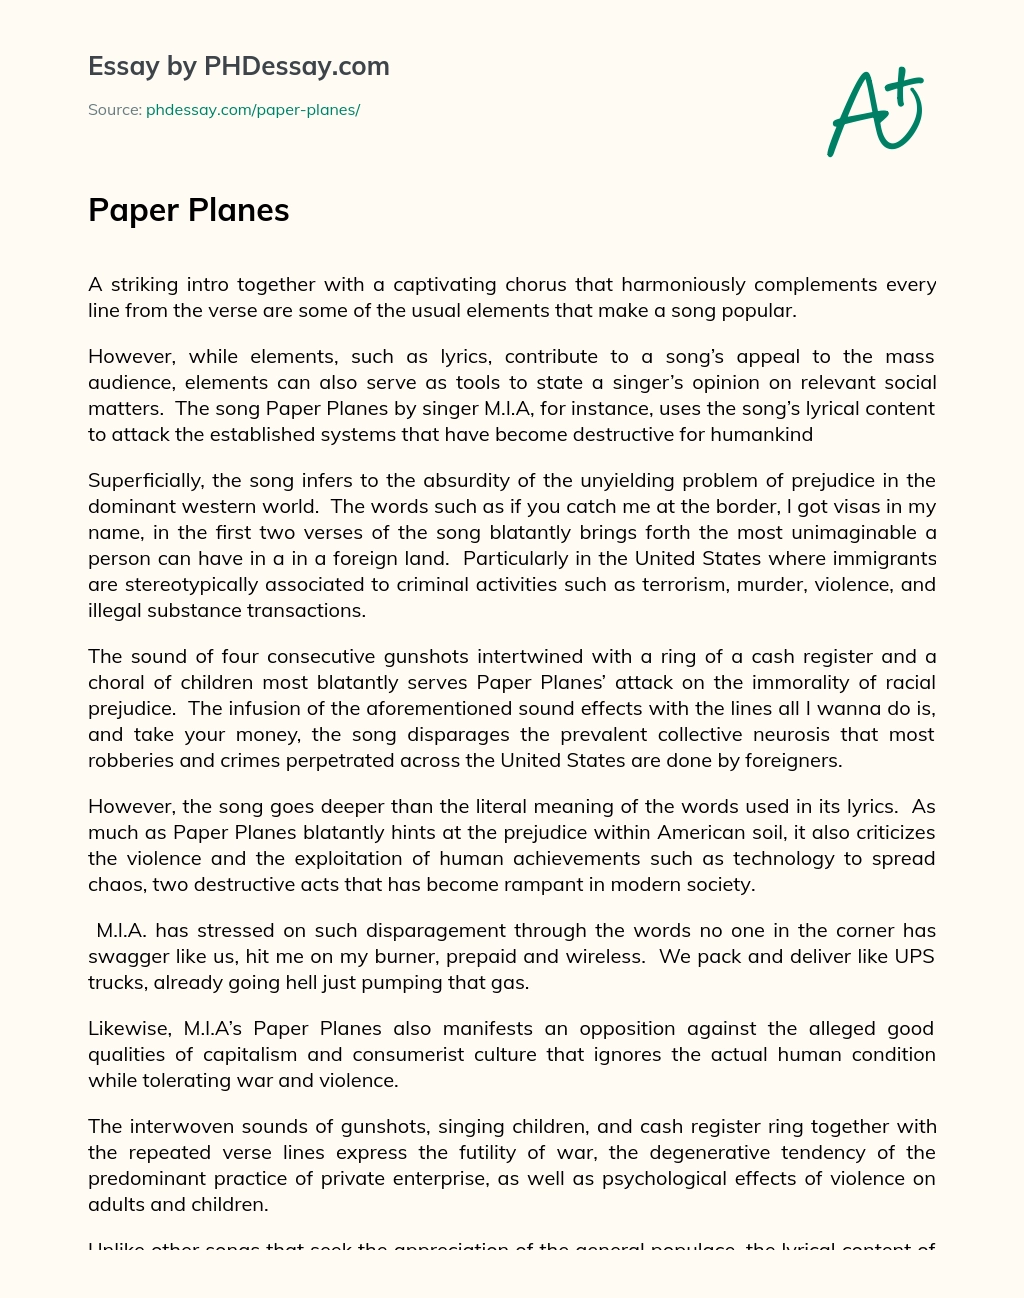 Paper Planes essay